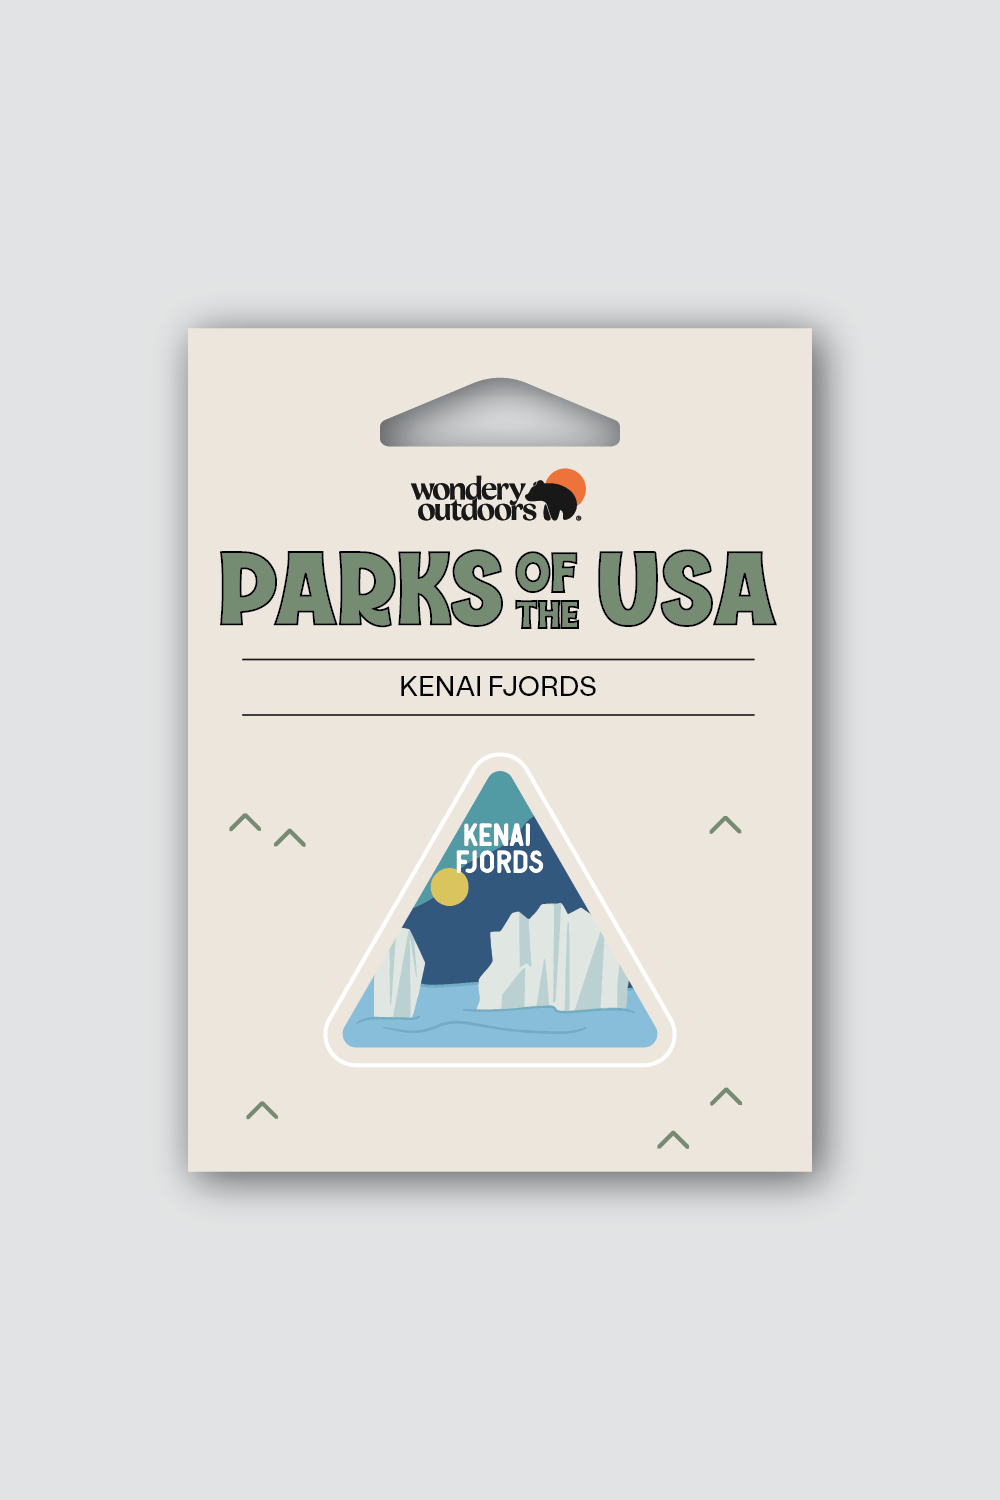 #national park_kenai fjords _USA National Parks souvenir sticker gift sets